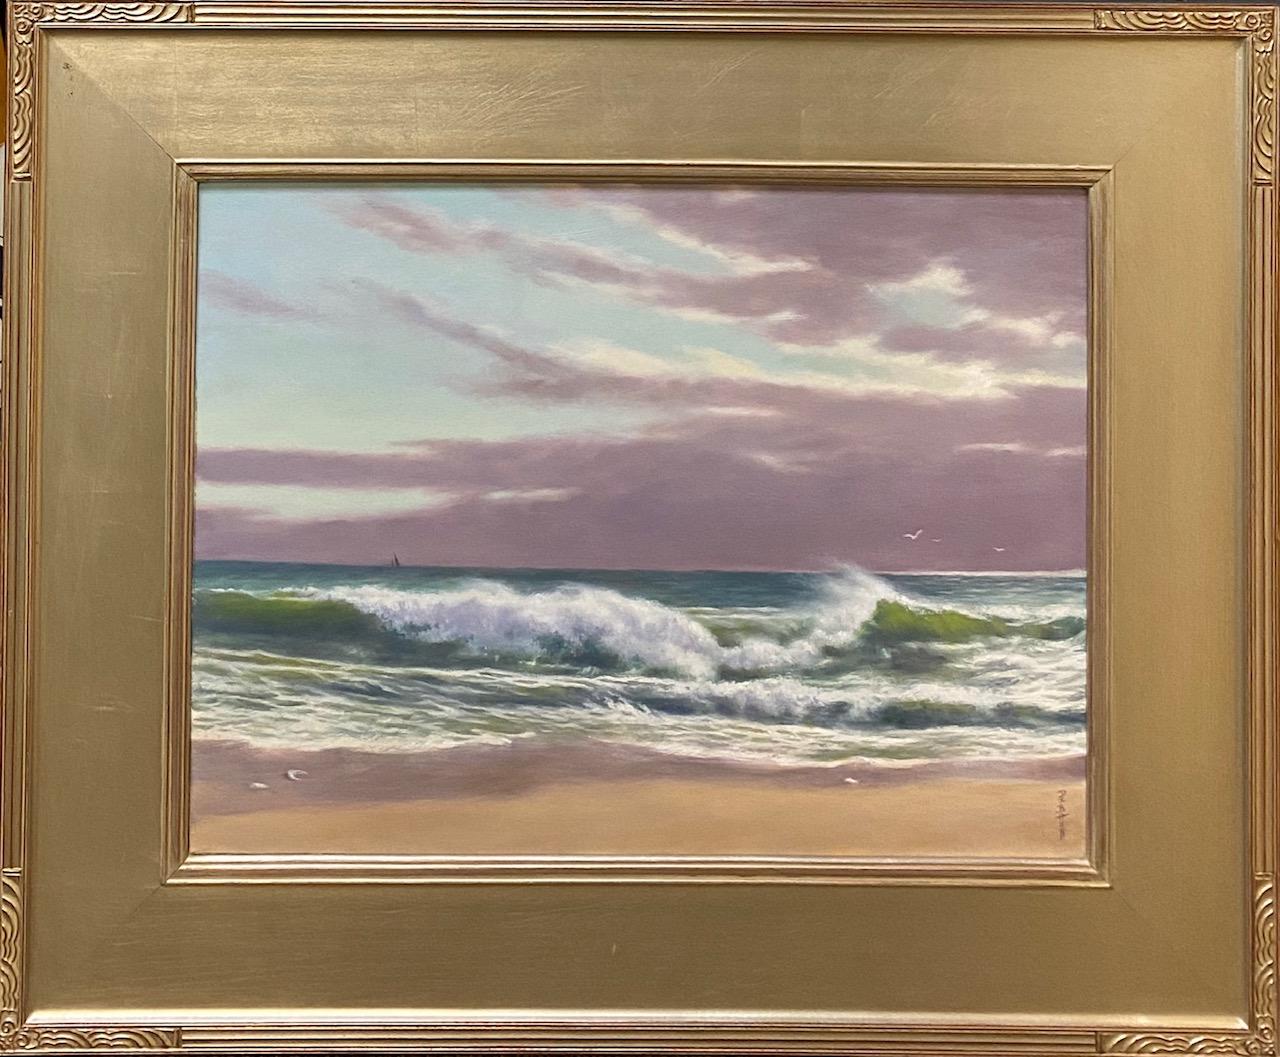 Barry DeBaun Landscape Painting - The Breakers, original 18x24 impressionist marine landscape